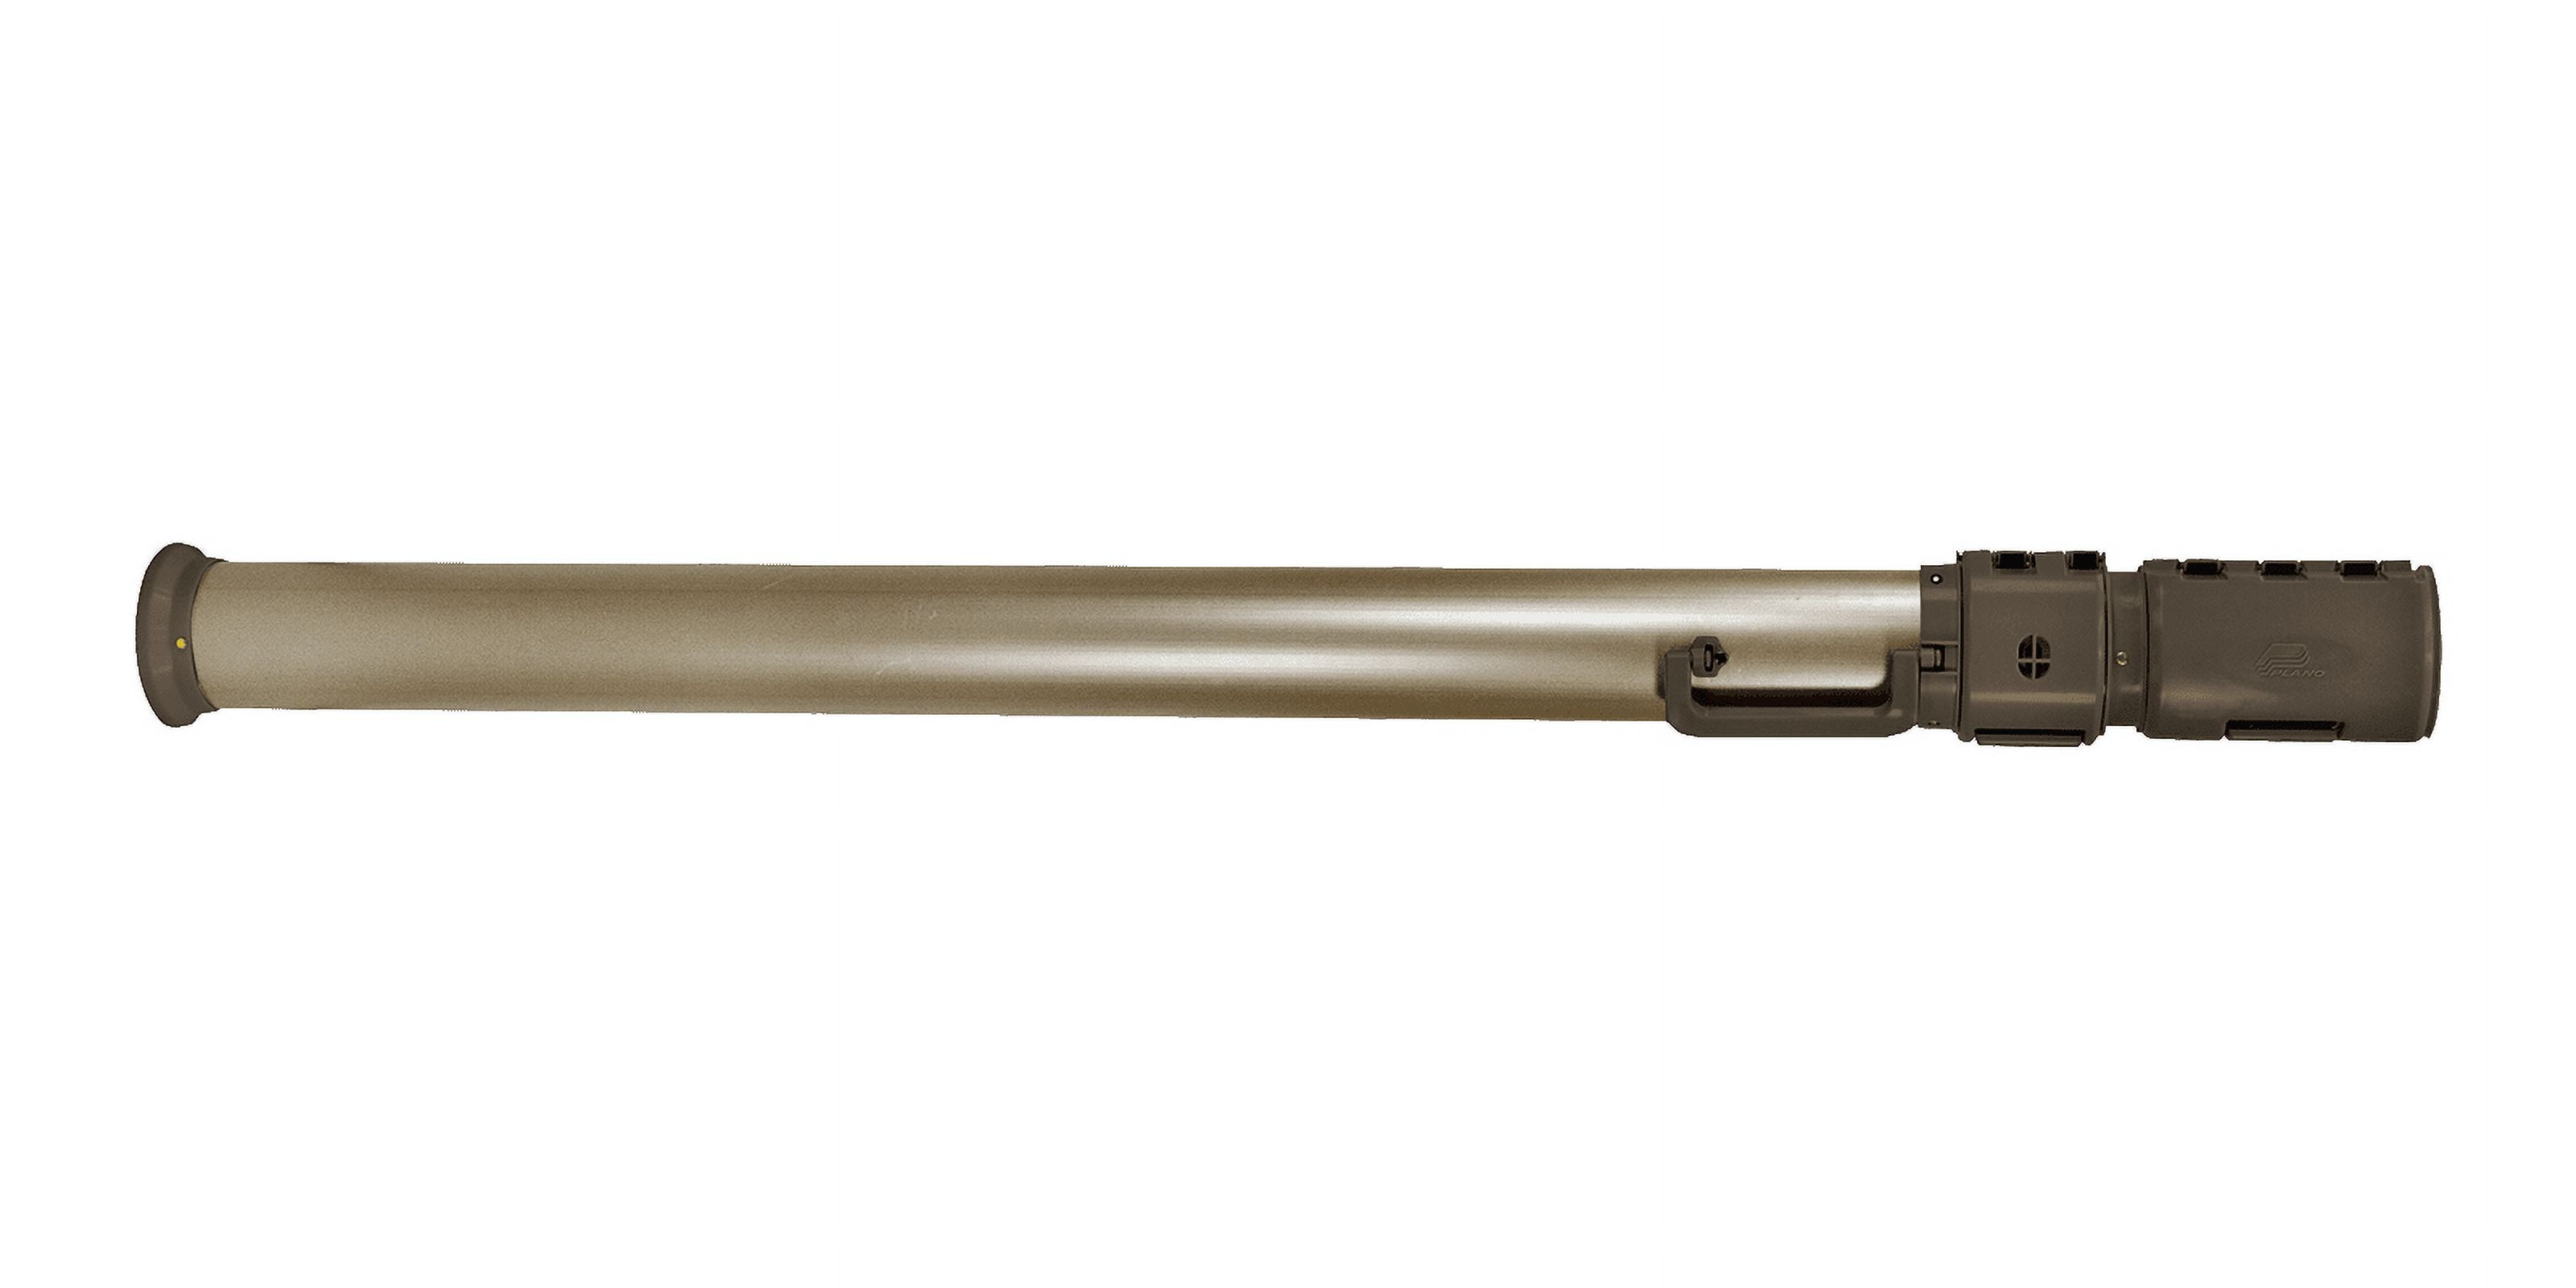 Plano Guide Series Adjustable Rod Tube, Graphite/Sandstone 